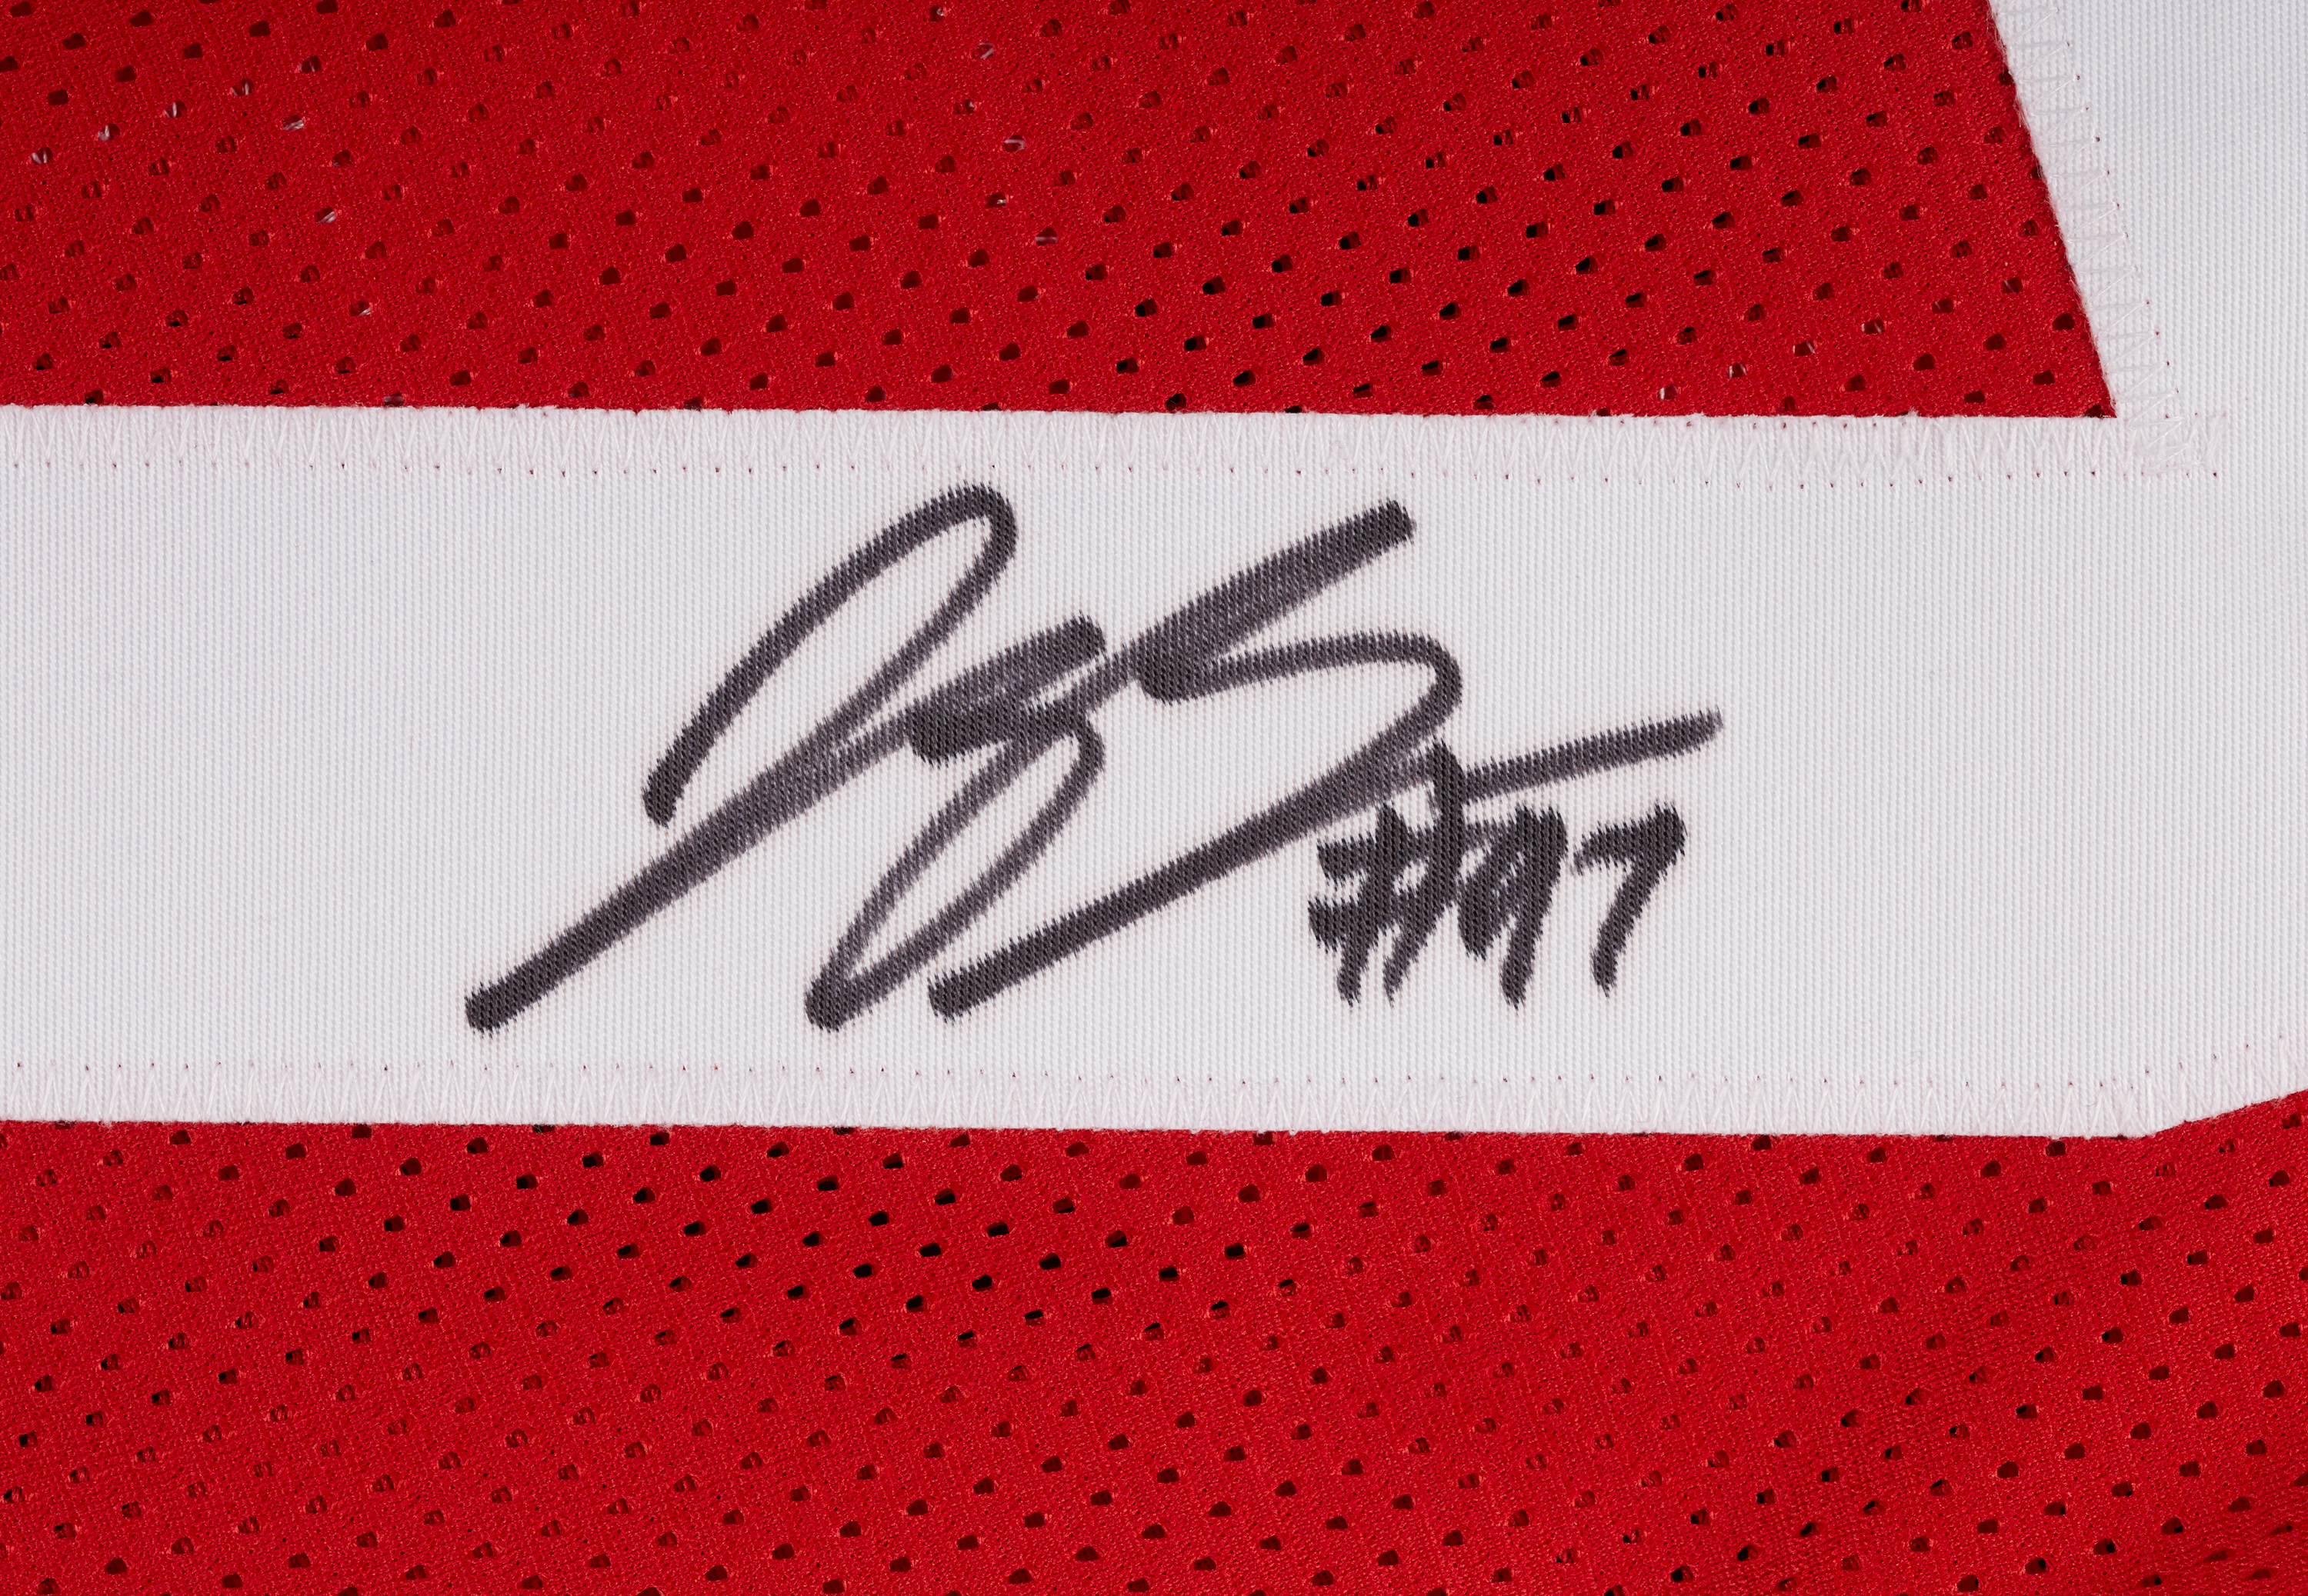 joey bosa autographed jersey